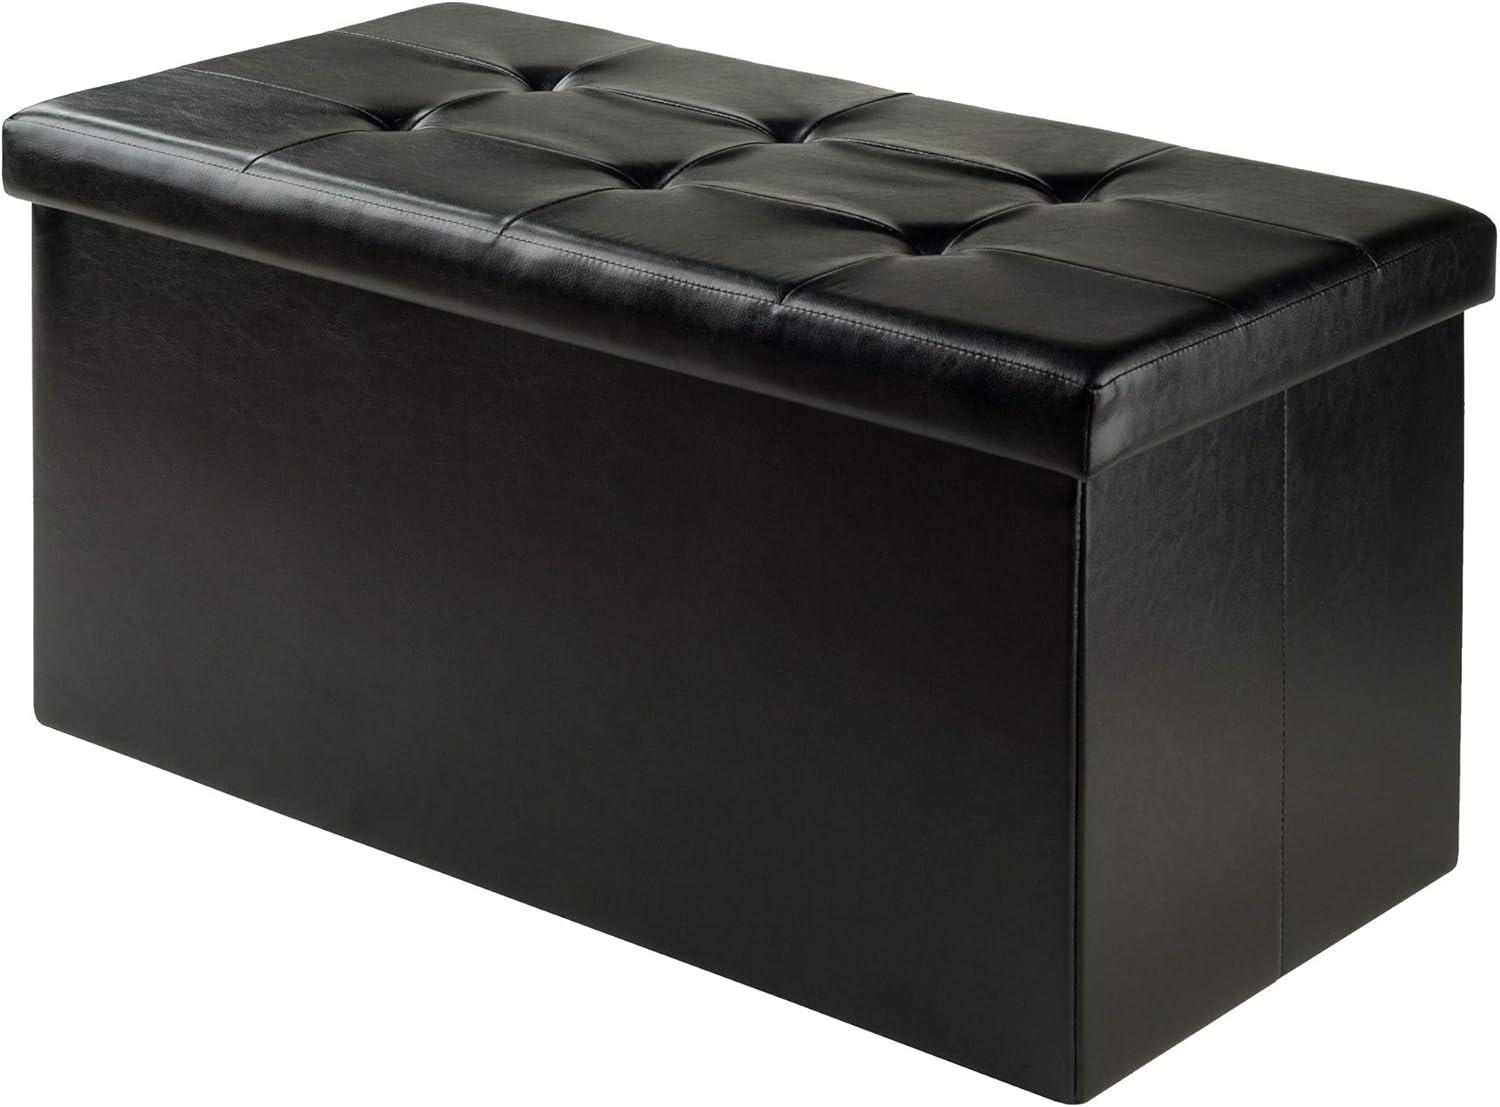 Ashford Transitional Black Faux Leather Storage Ottoman